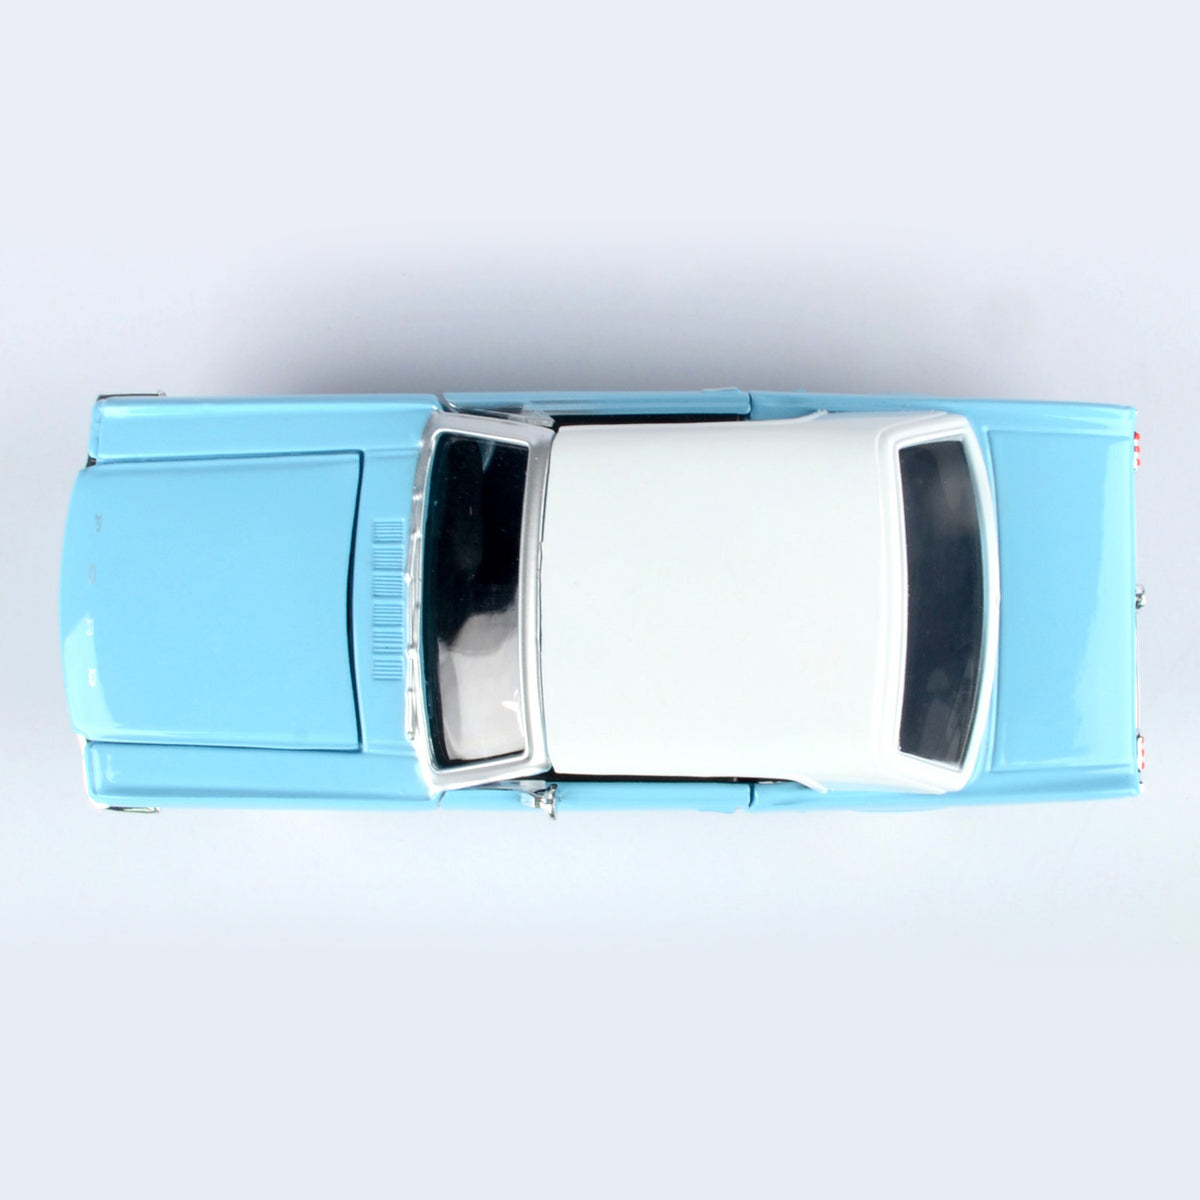 James Bond Ford Mustang Model Car - Thunderball Edition - By Motormax